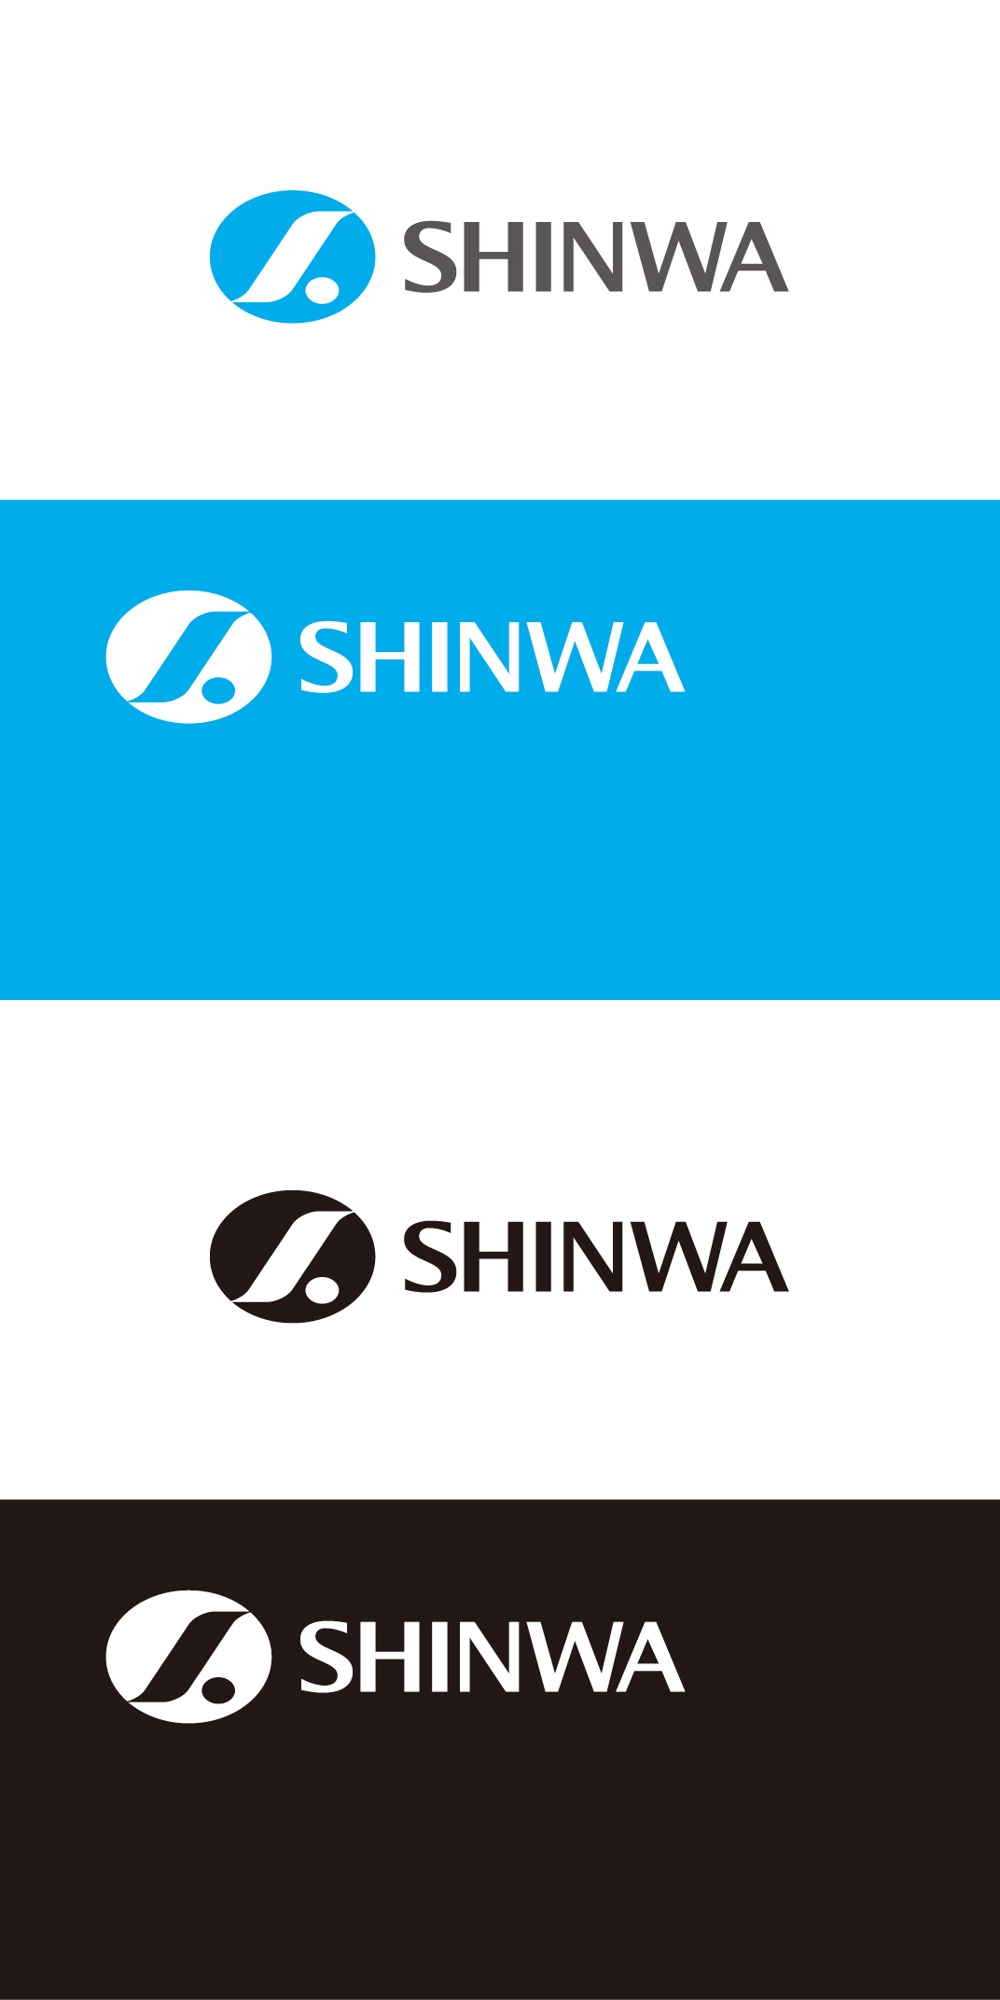 Shinwa3.jpg